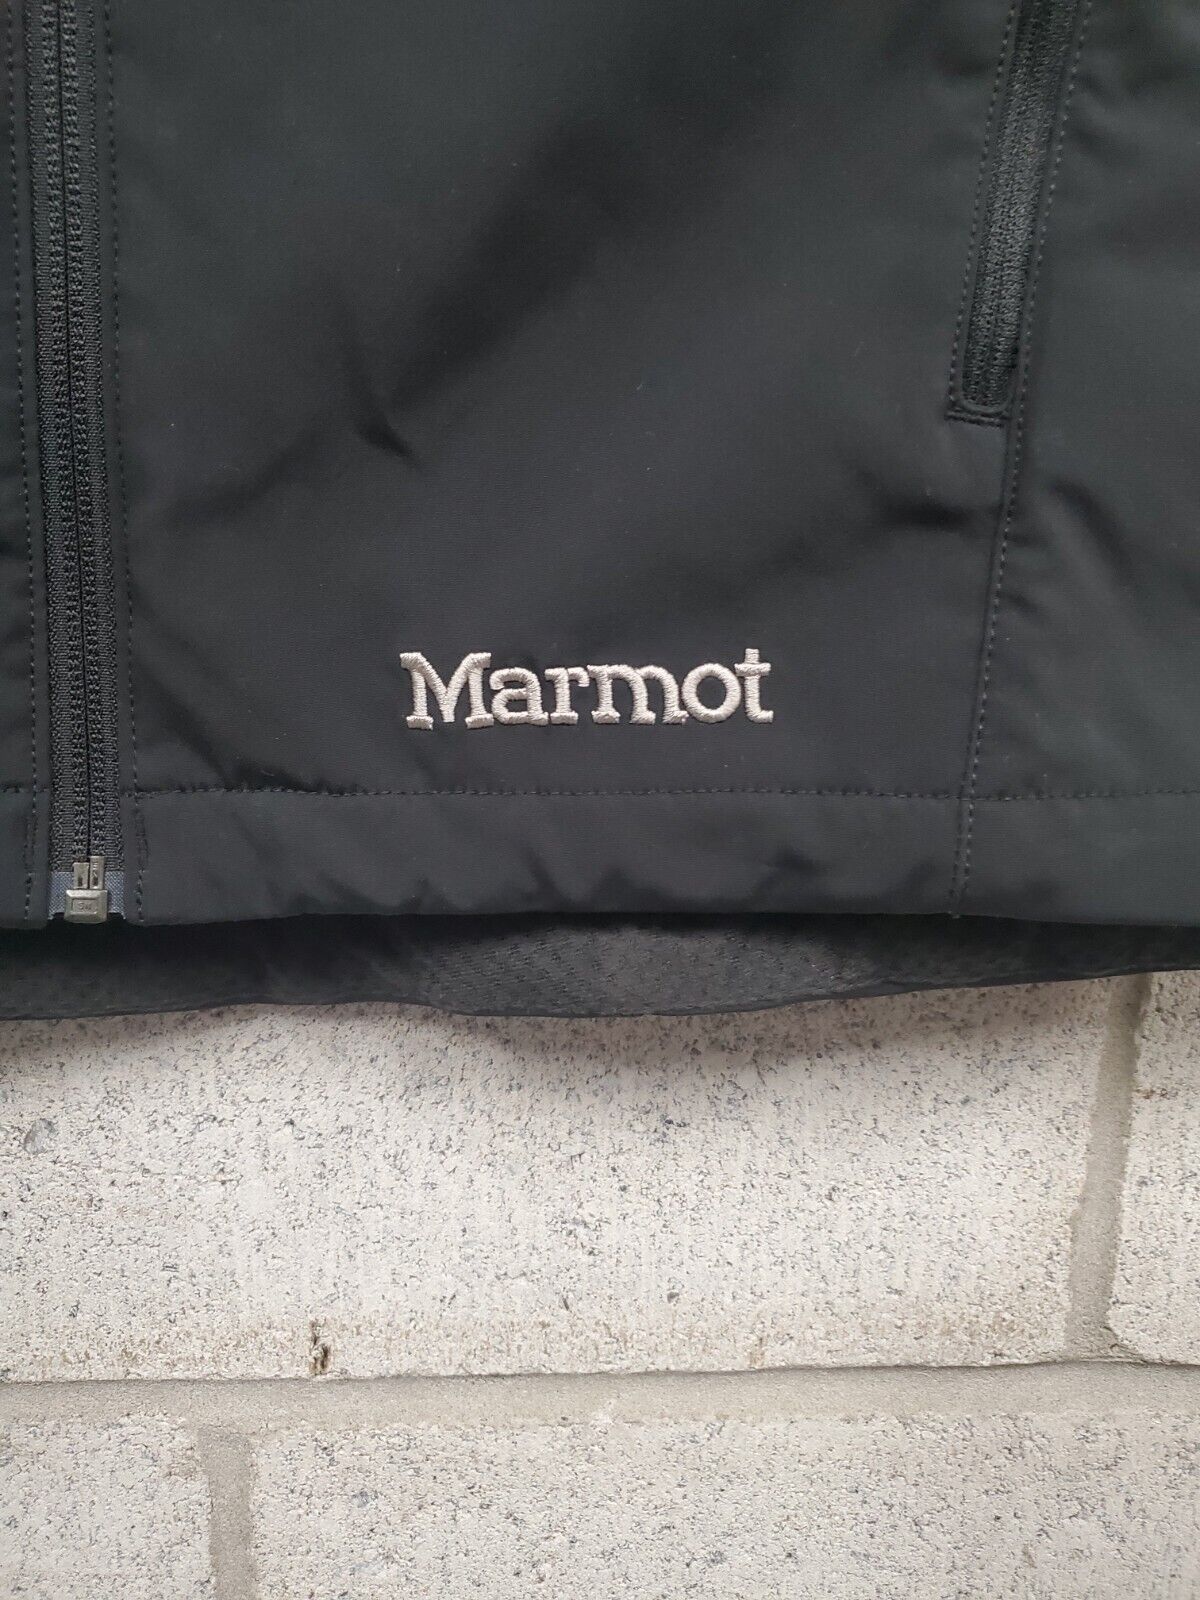 Mens Marmot Vest Size Medium NWT